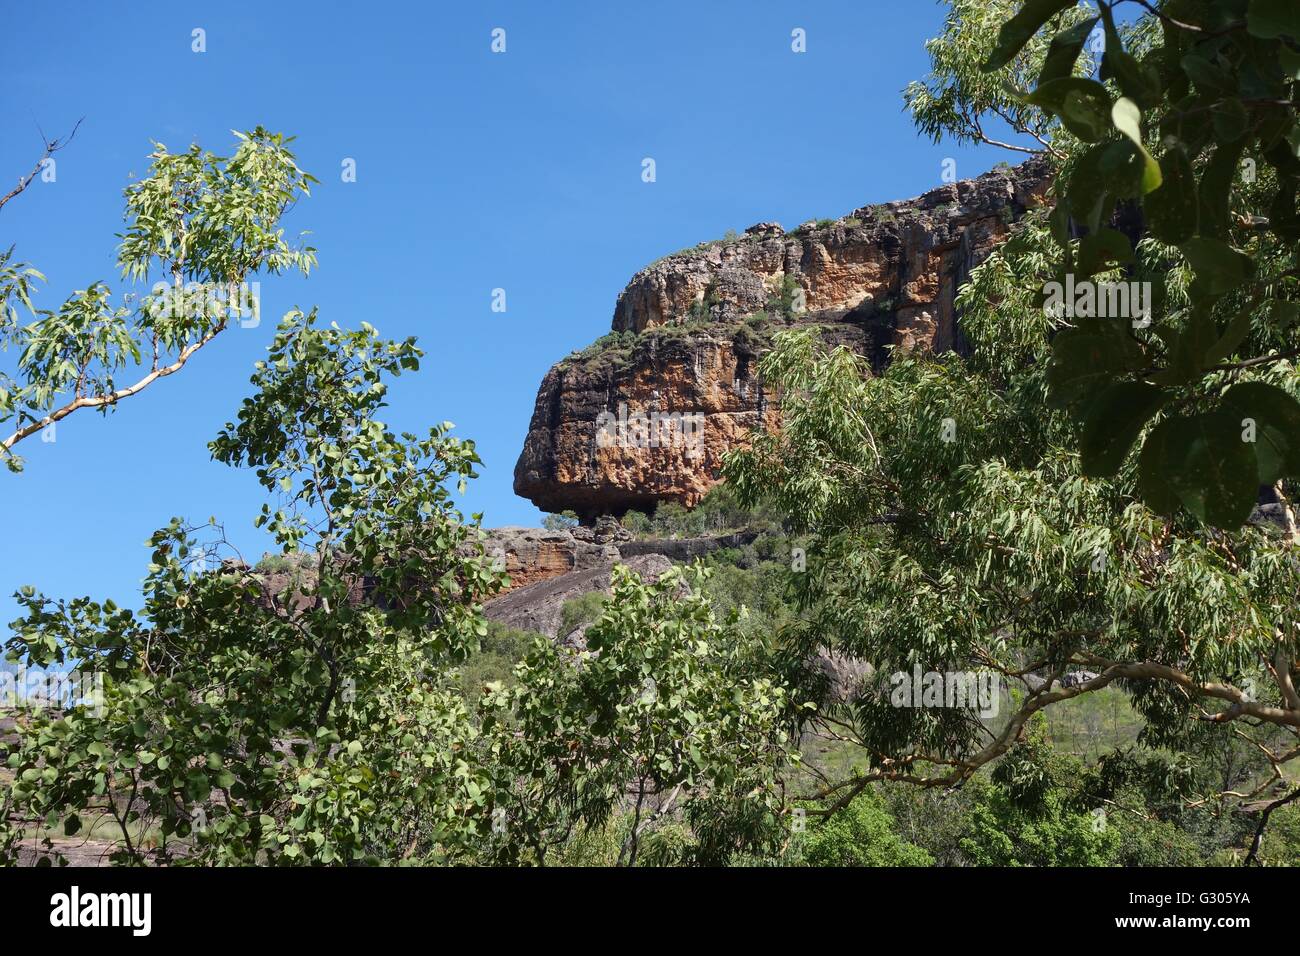 View of Nourlangie Rock (Burrunggui) at Kakadu National Park, Northern Territory, Australia Stock Photo